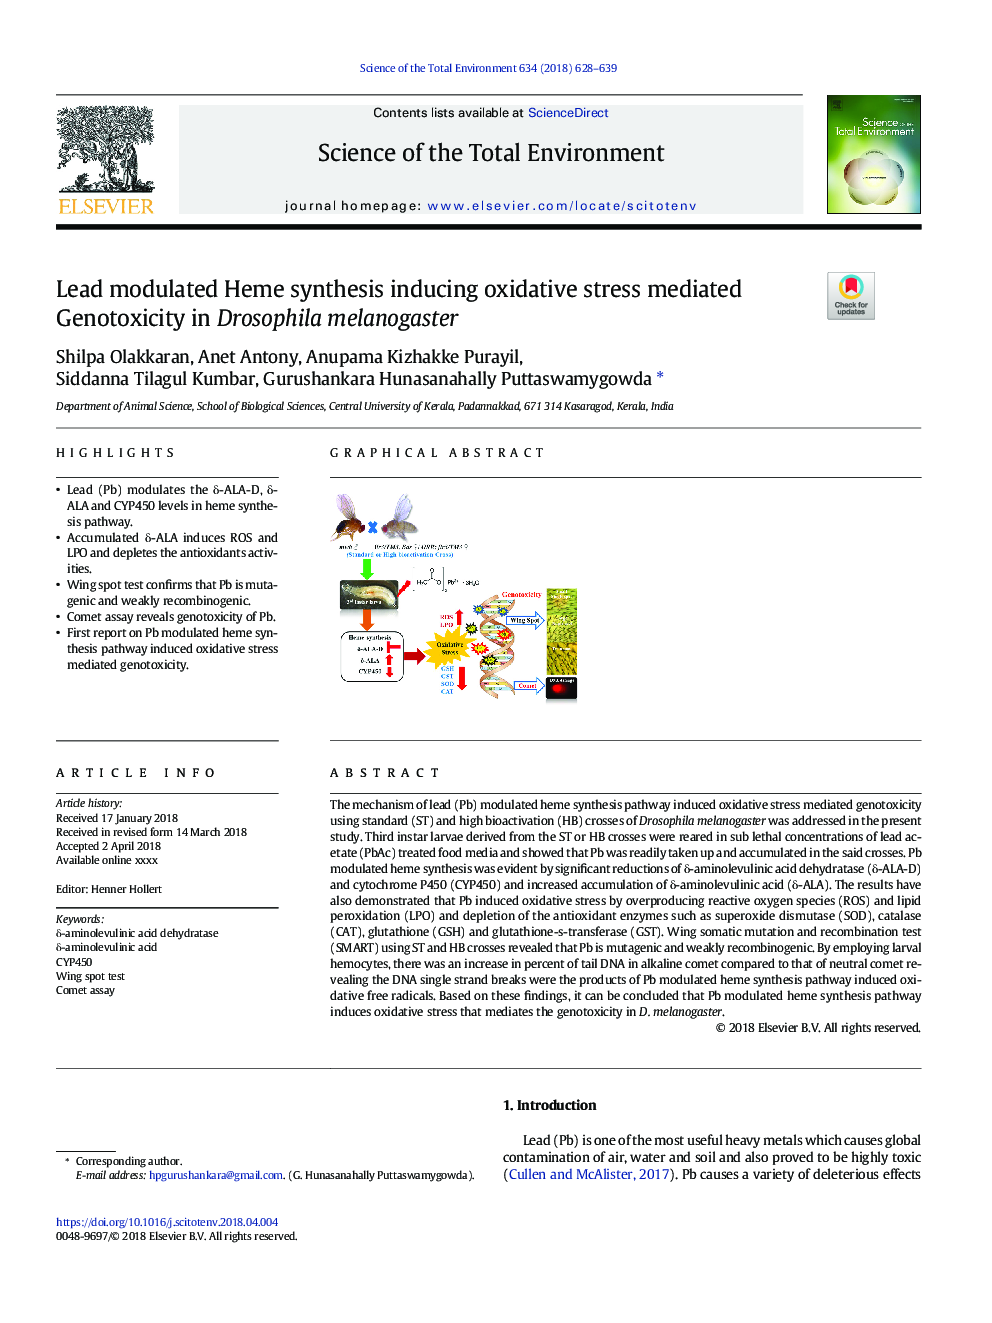 Lead modulated Heme synthesis inducing oxidative stress mediated Genotoxicity in Drosophila melanogaster